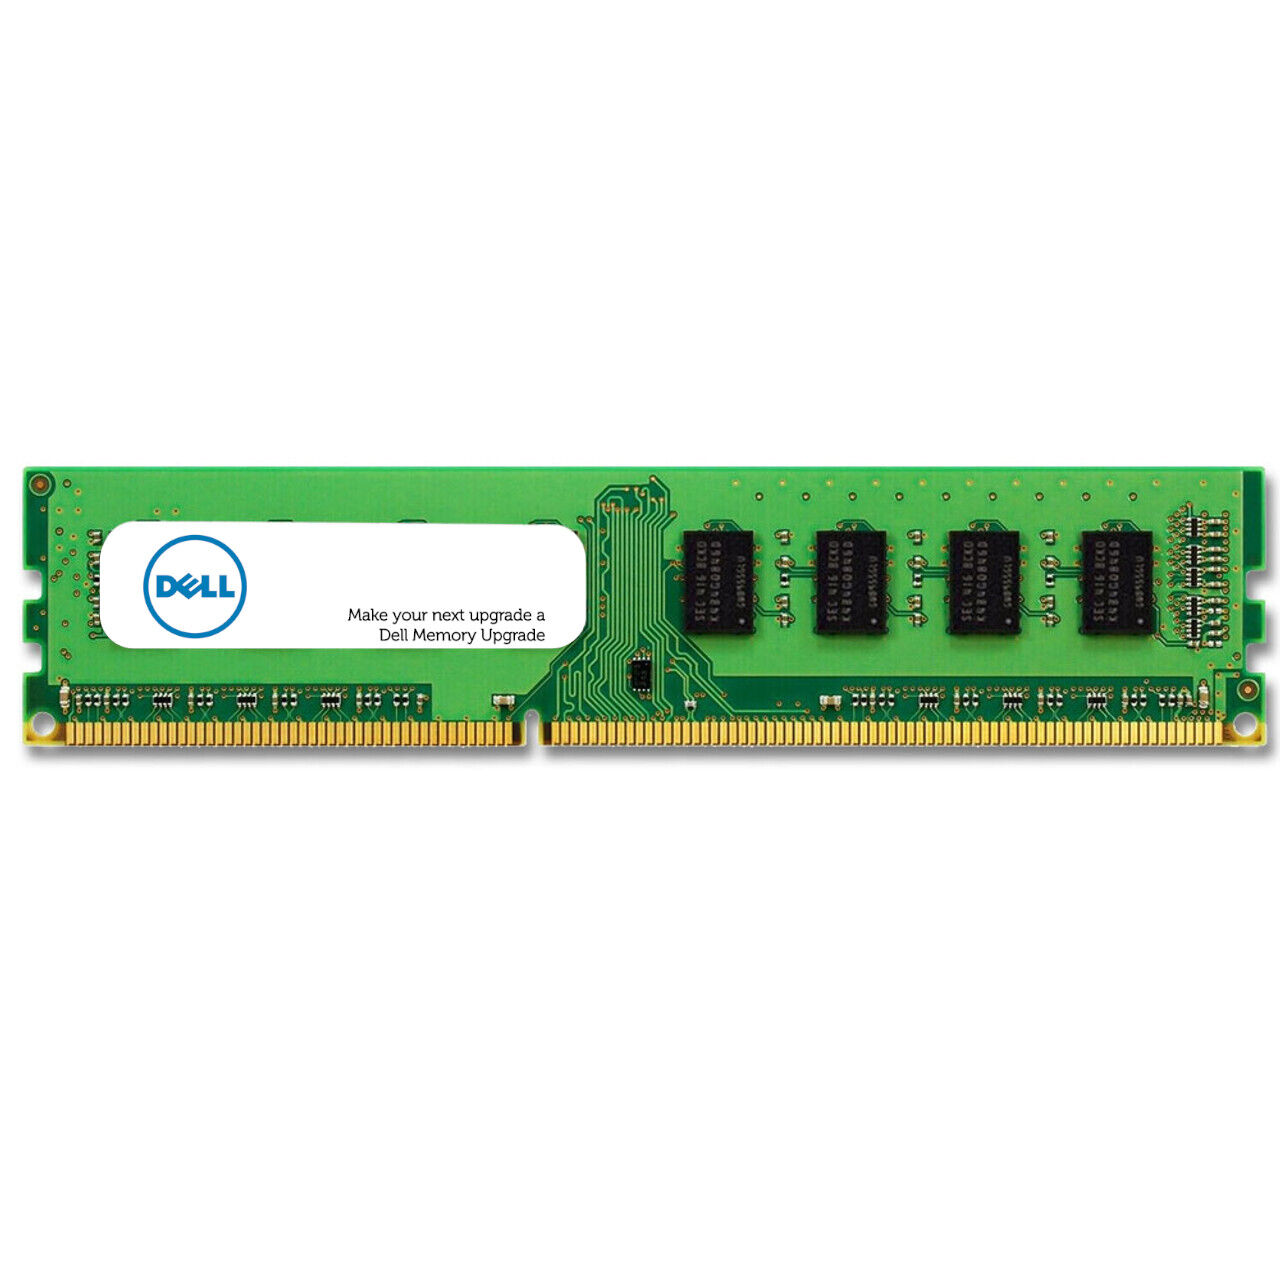 Dell Memory SNPP4T2FC/4G A8733211 4GB 1Rx8 DDR3 UDIMM 1600MHz RAM